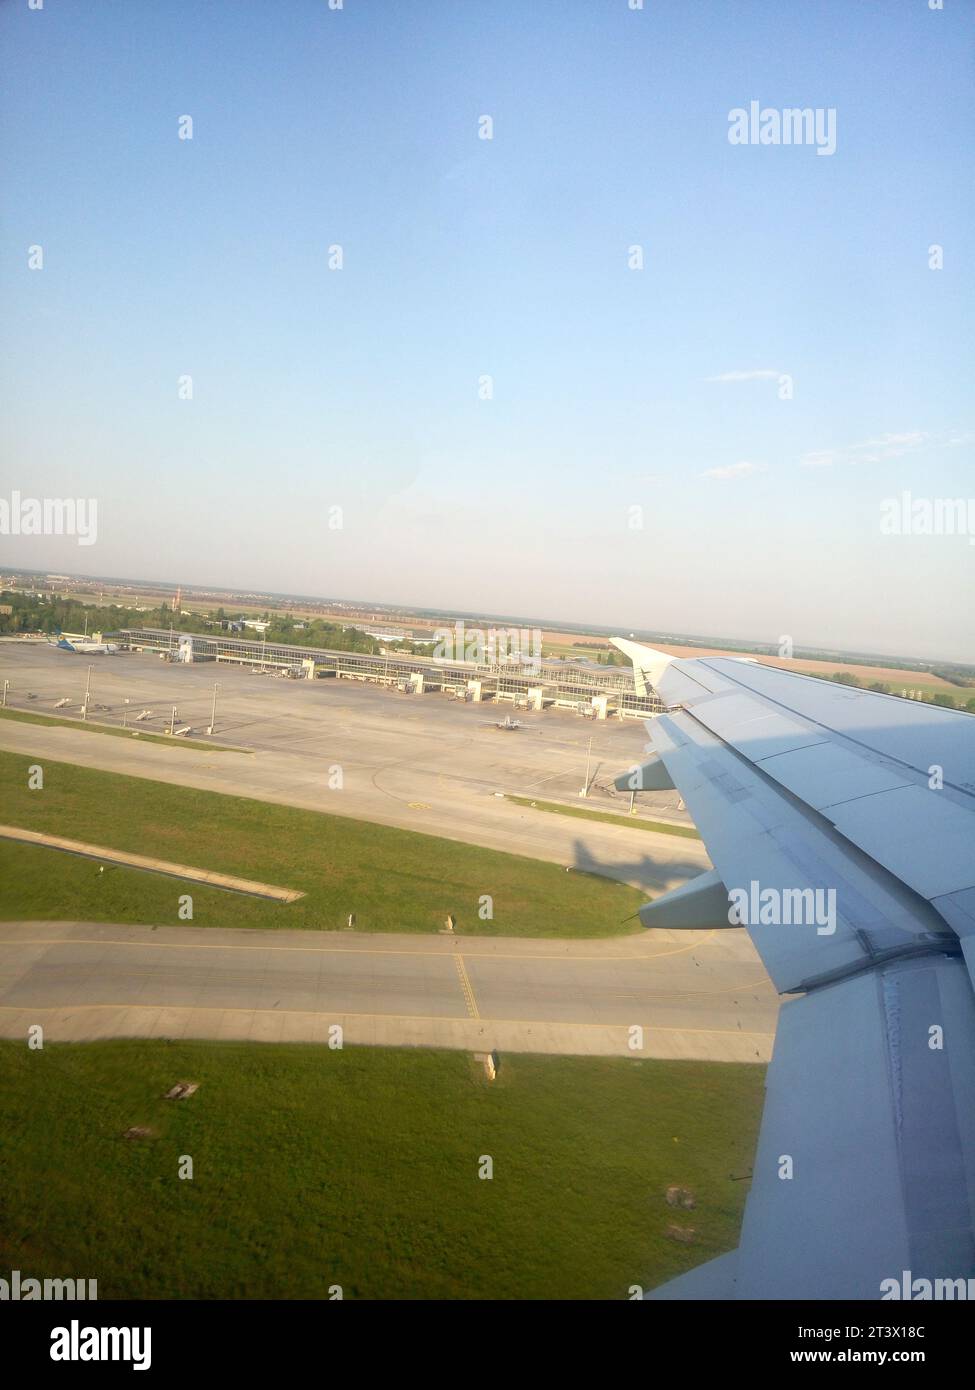 Plane flies over Boryspil airport, Ukraine. Plane metal wing shining in the sunrays Stock Photo